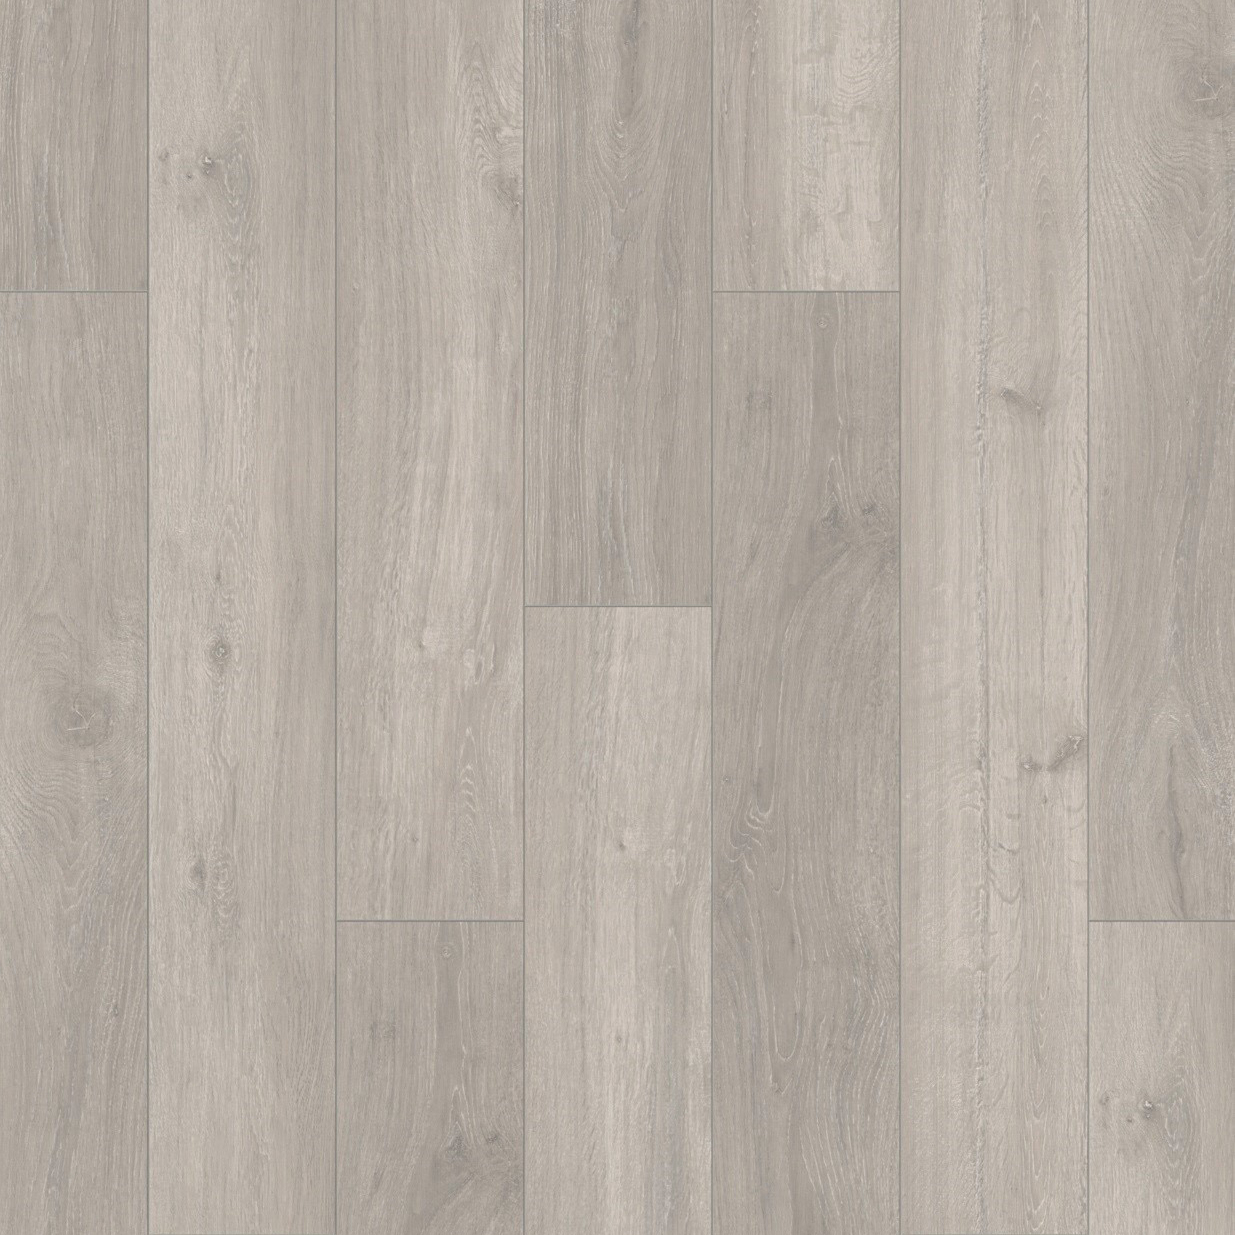 Image of Wickes Embossed Texture Arreton Light Grey Oak 12mm Laminate Flooring - 1.48m²